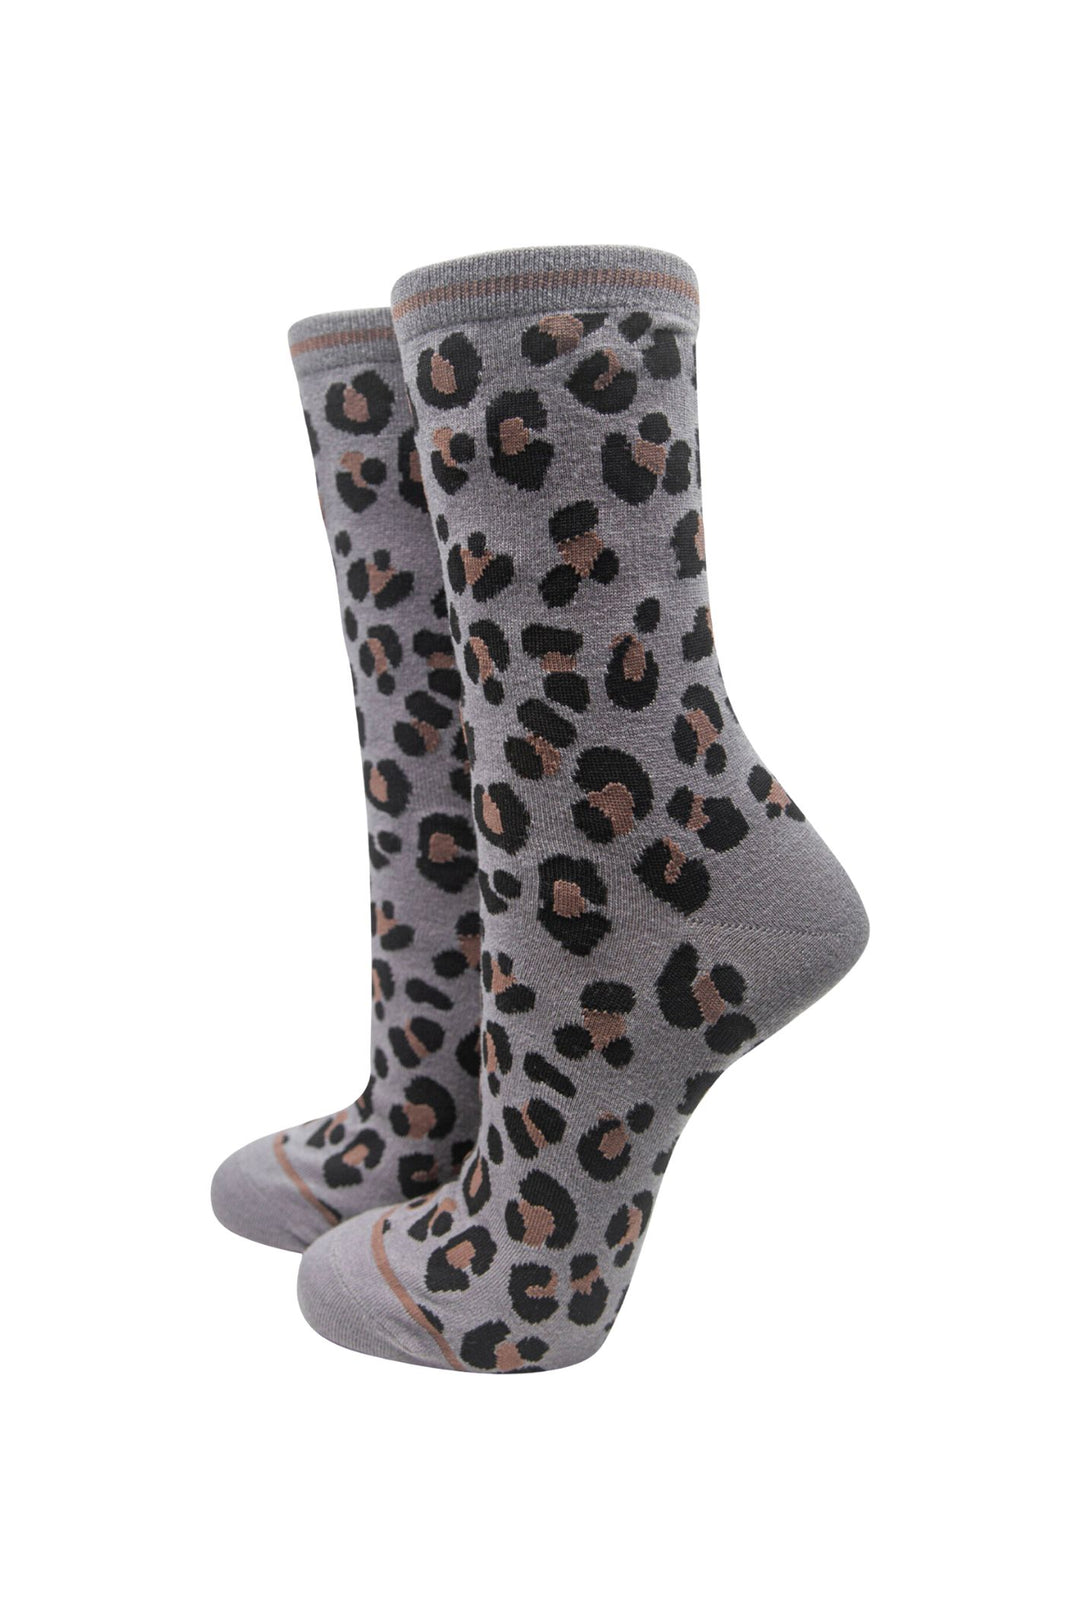 Grey Bamboo Socks Leopard Print Ankle Socks